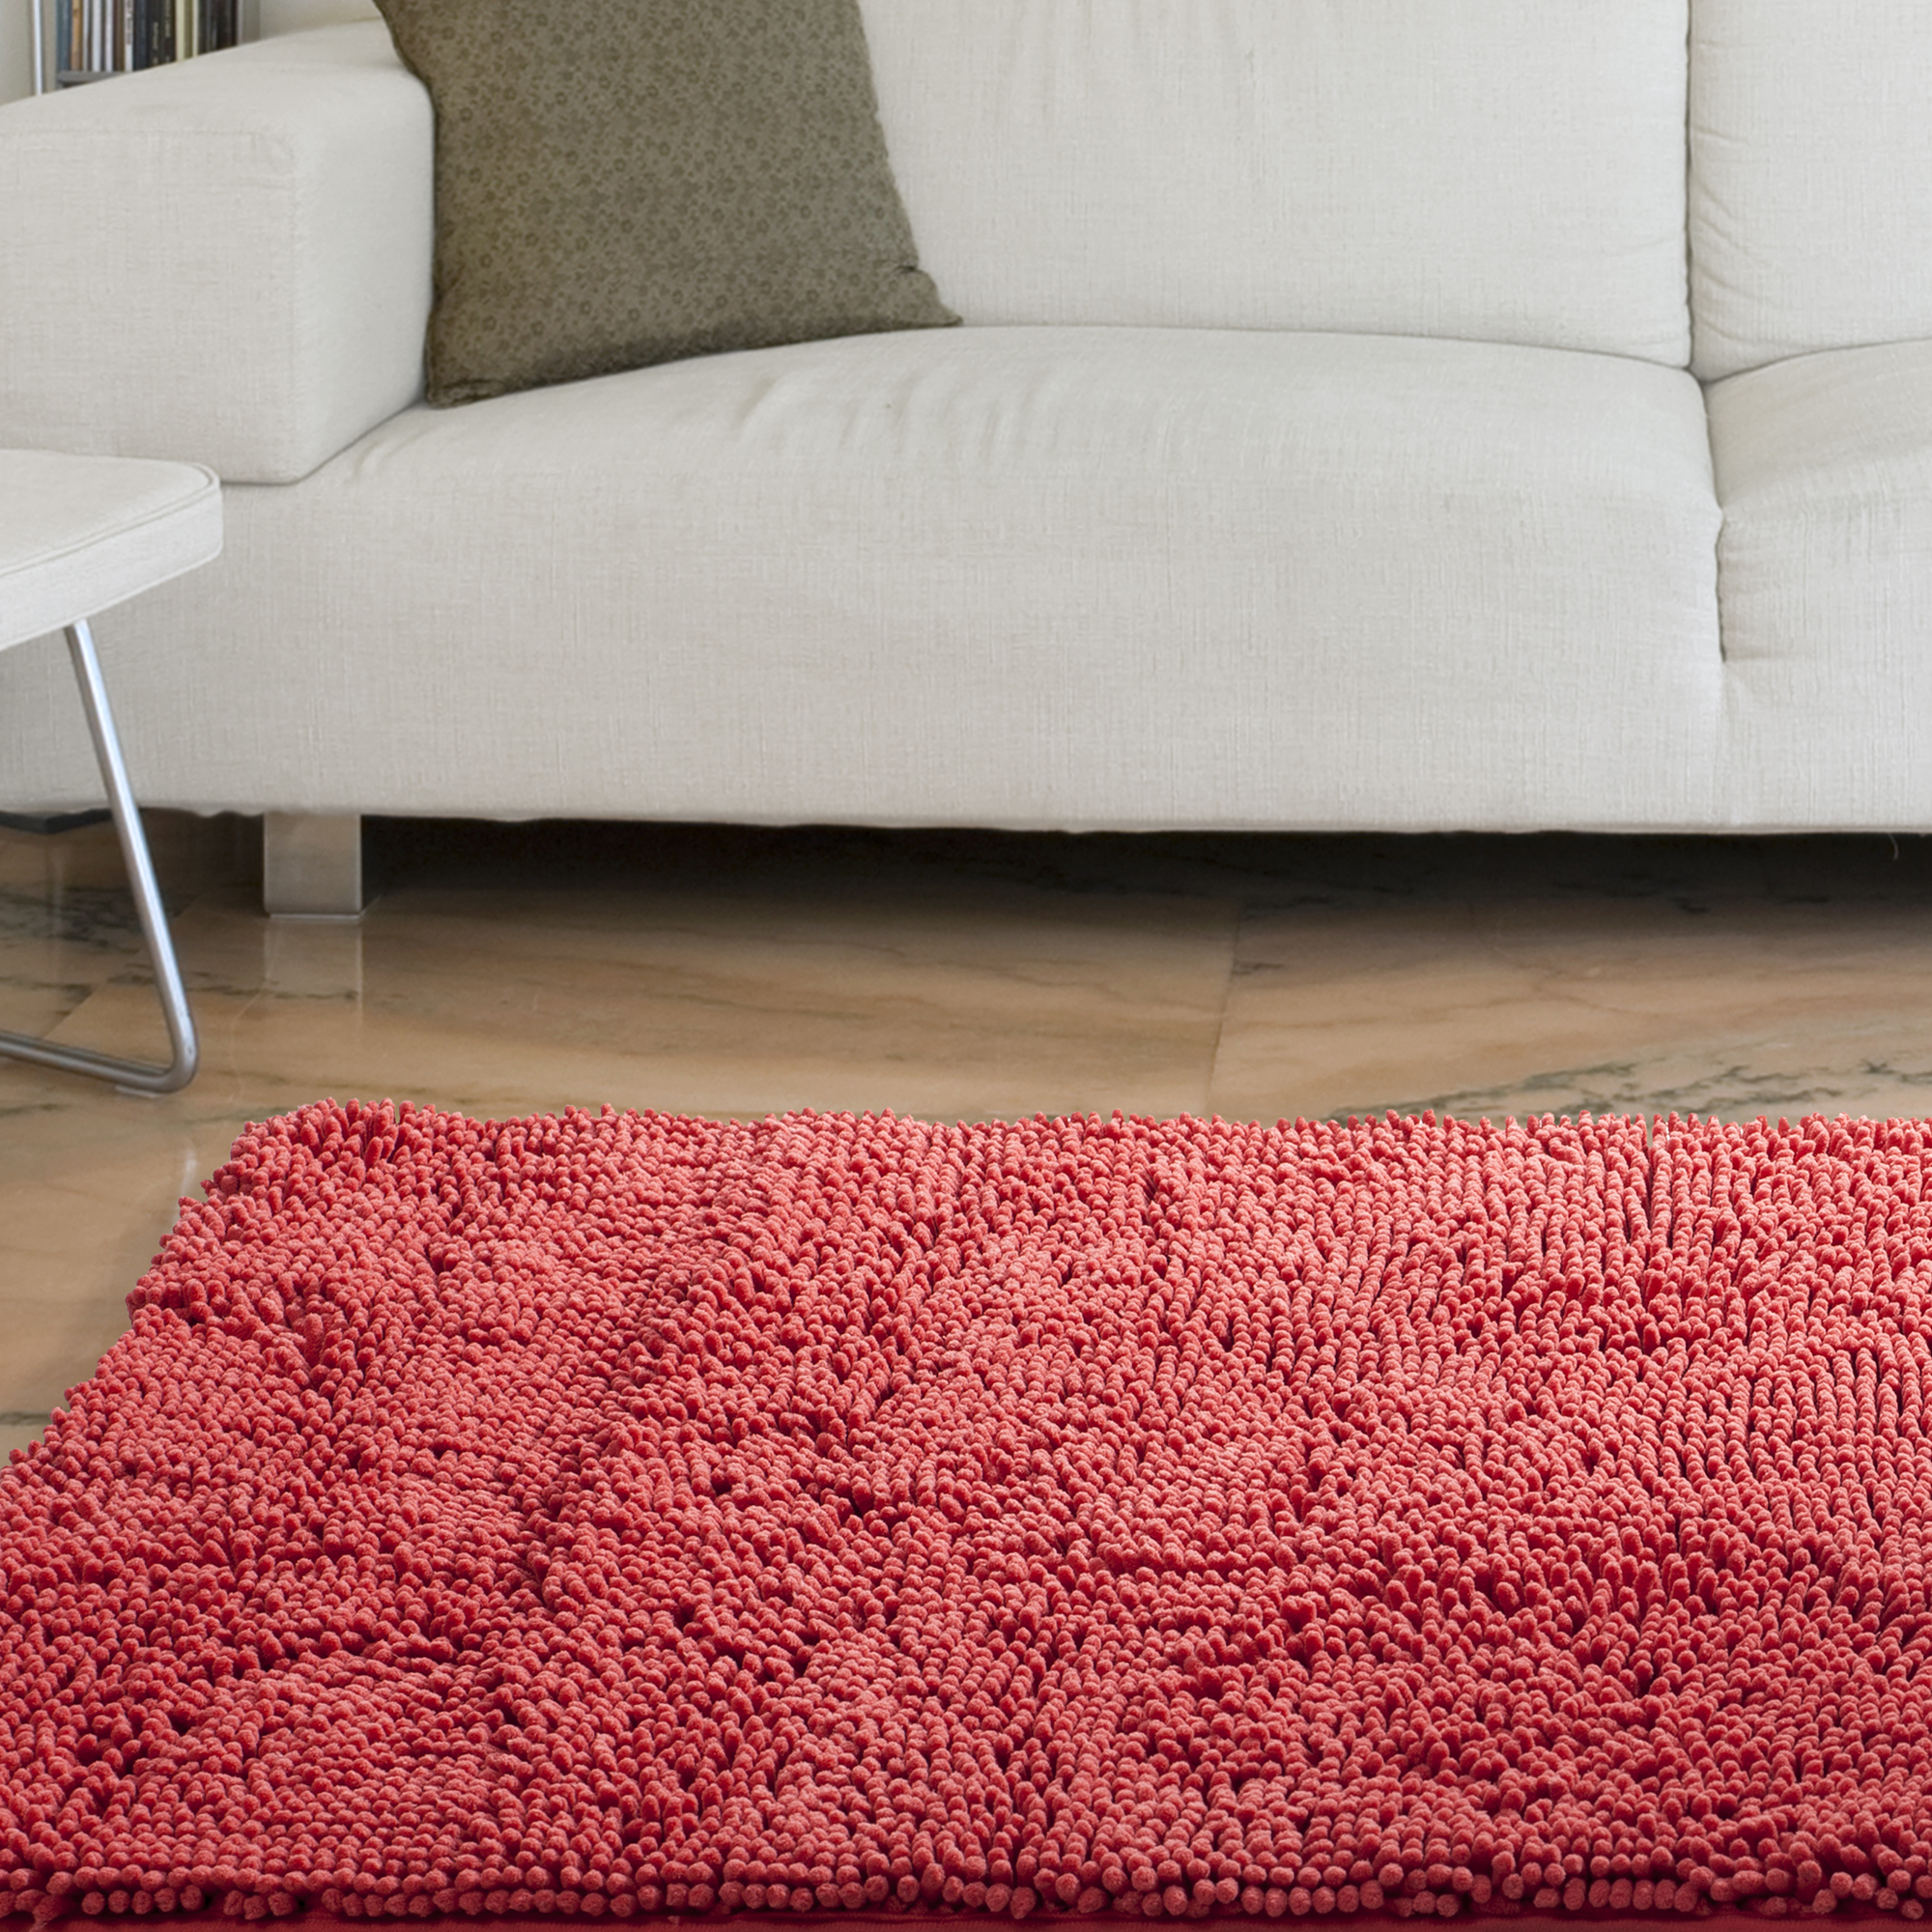 Somerset Home High Pile Shag Rug Carpet - Coral- 21x36